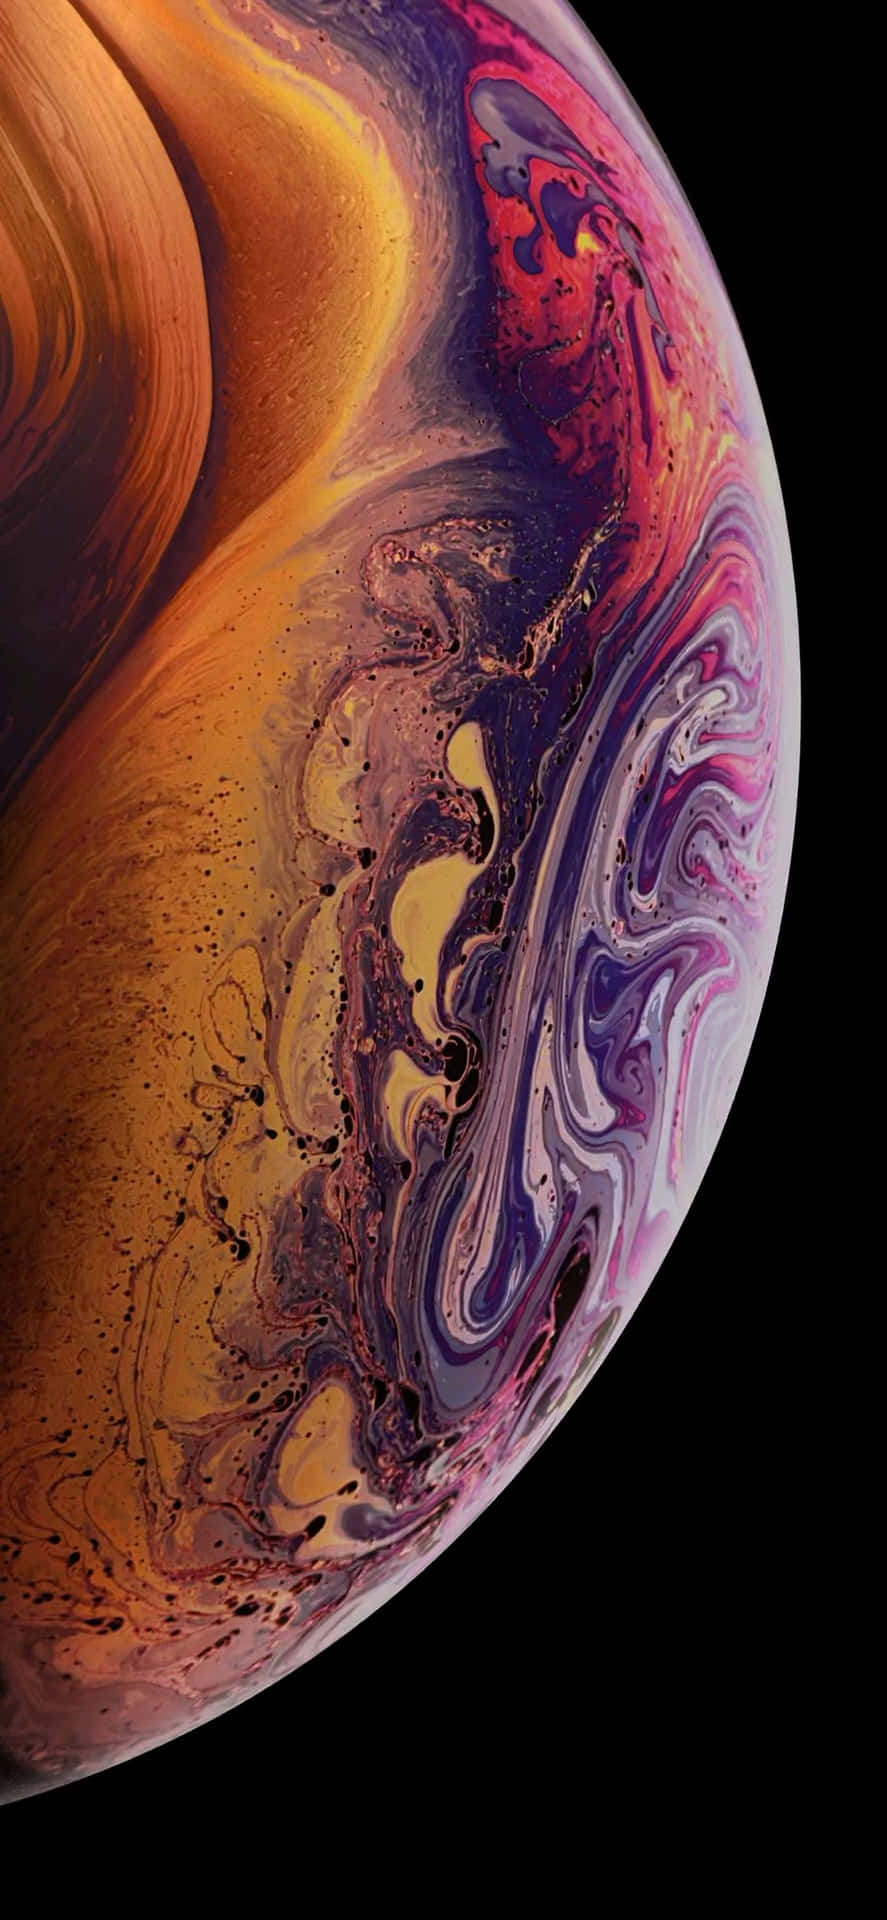 Apple Iphone Xs Wallpaper